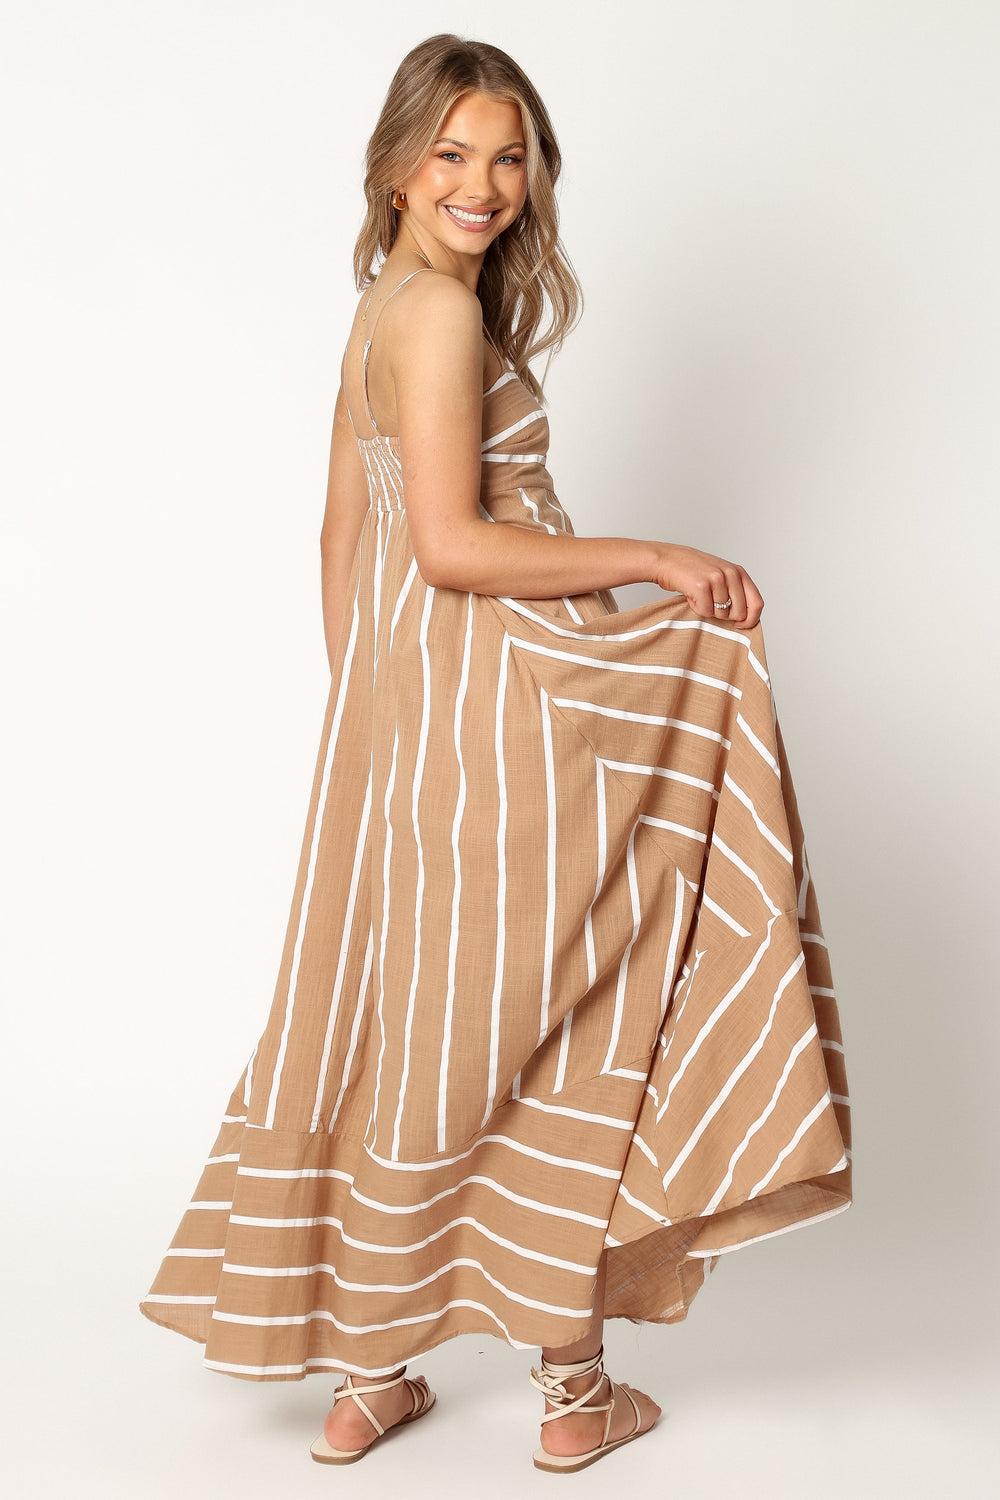 Petal and Pup USA DRESSES Brea Maxi Dress - Tan Stripe